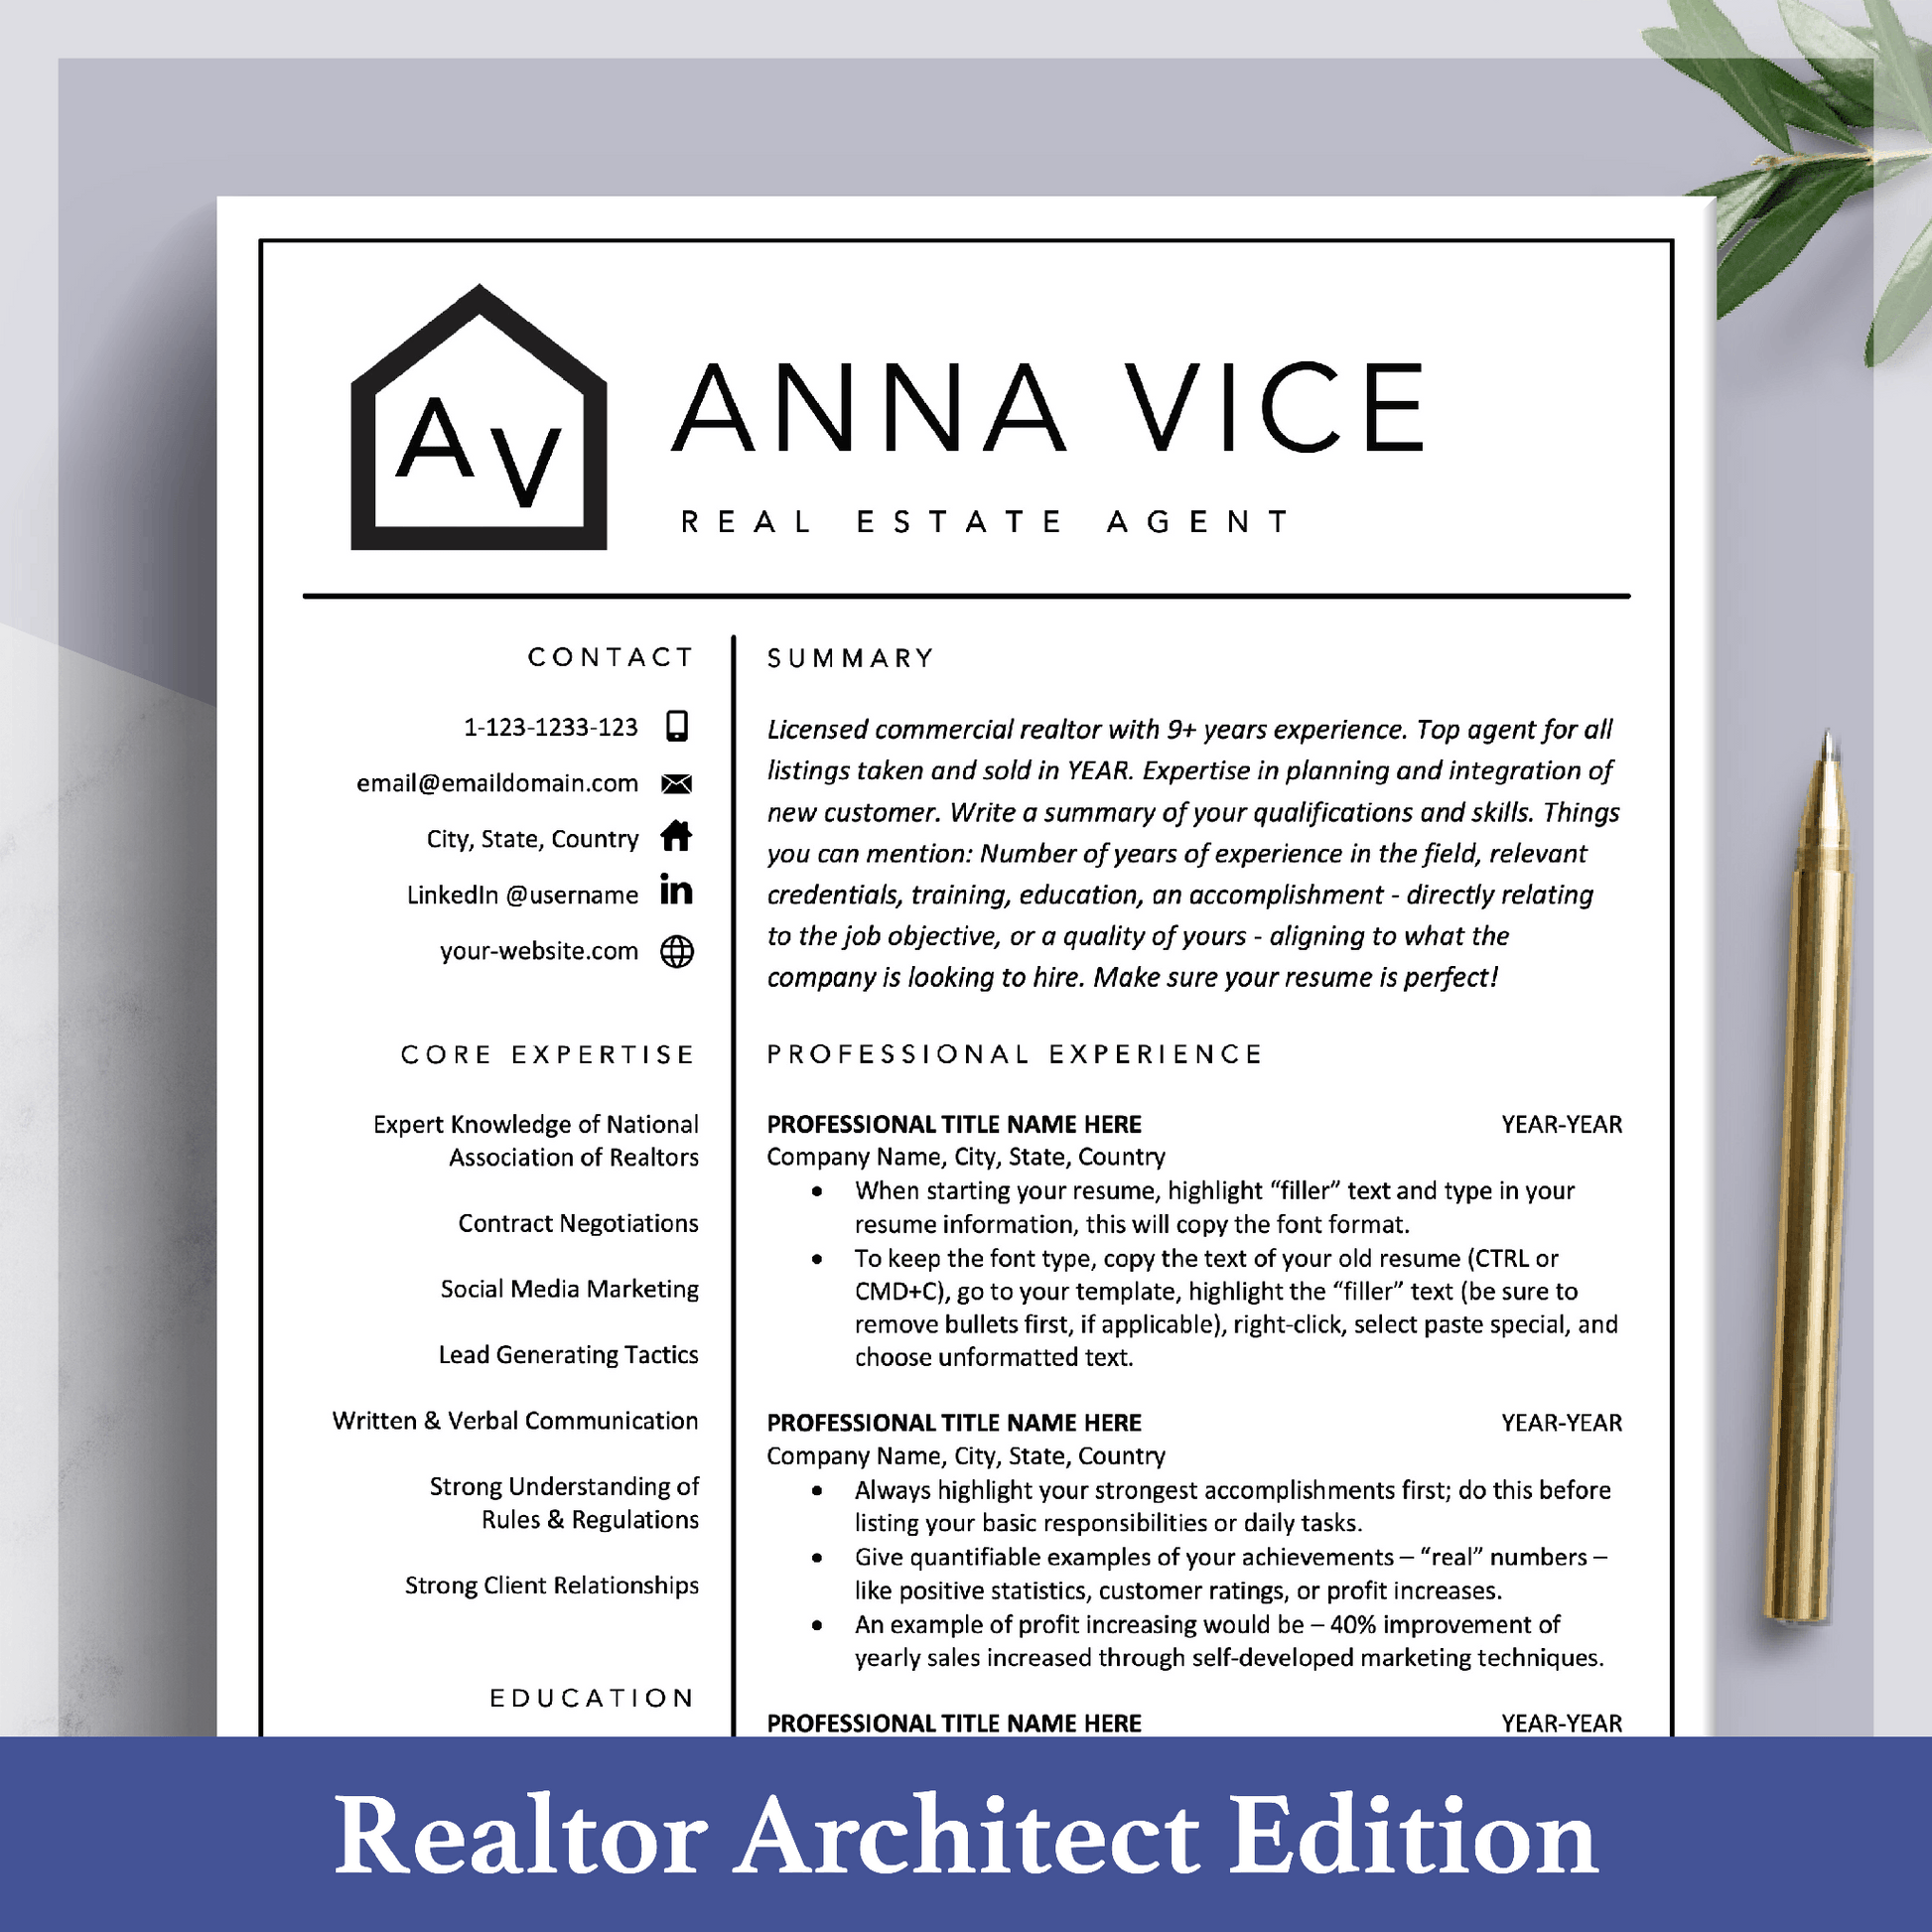 Real Estate Agent Resume Template | Realtor CV Design - The Art of Resume